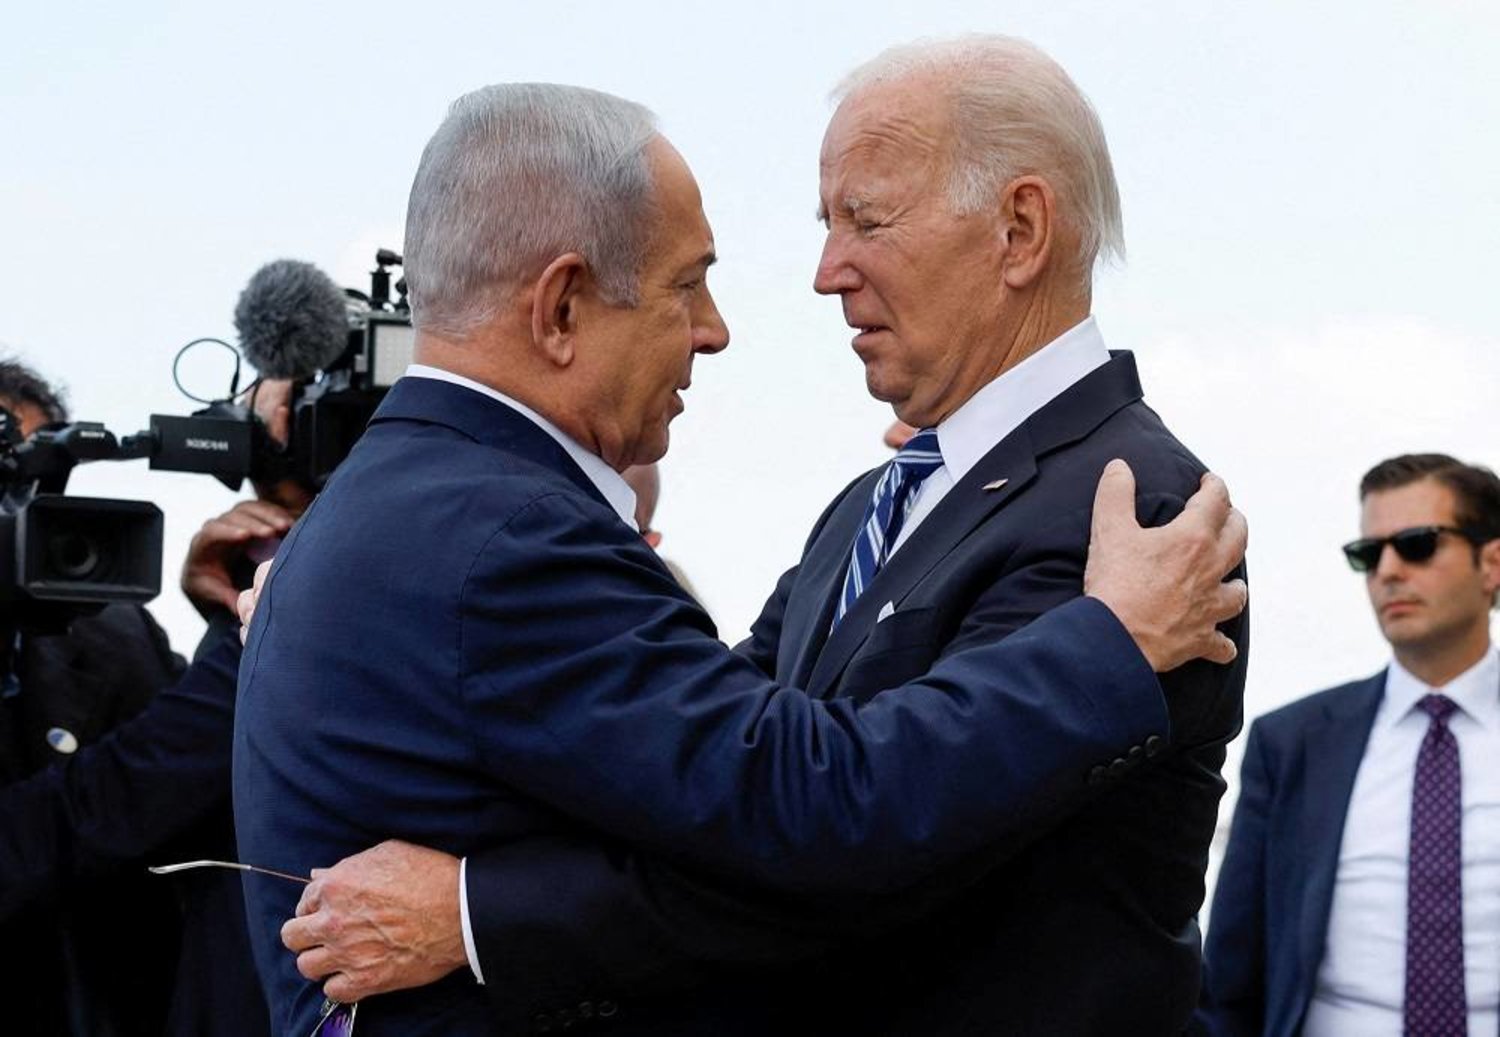 Israeli Prime Minster Benjamin Netanyahu and U.S. President Joe Biden